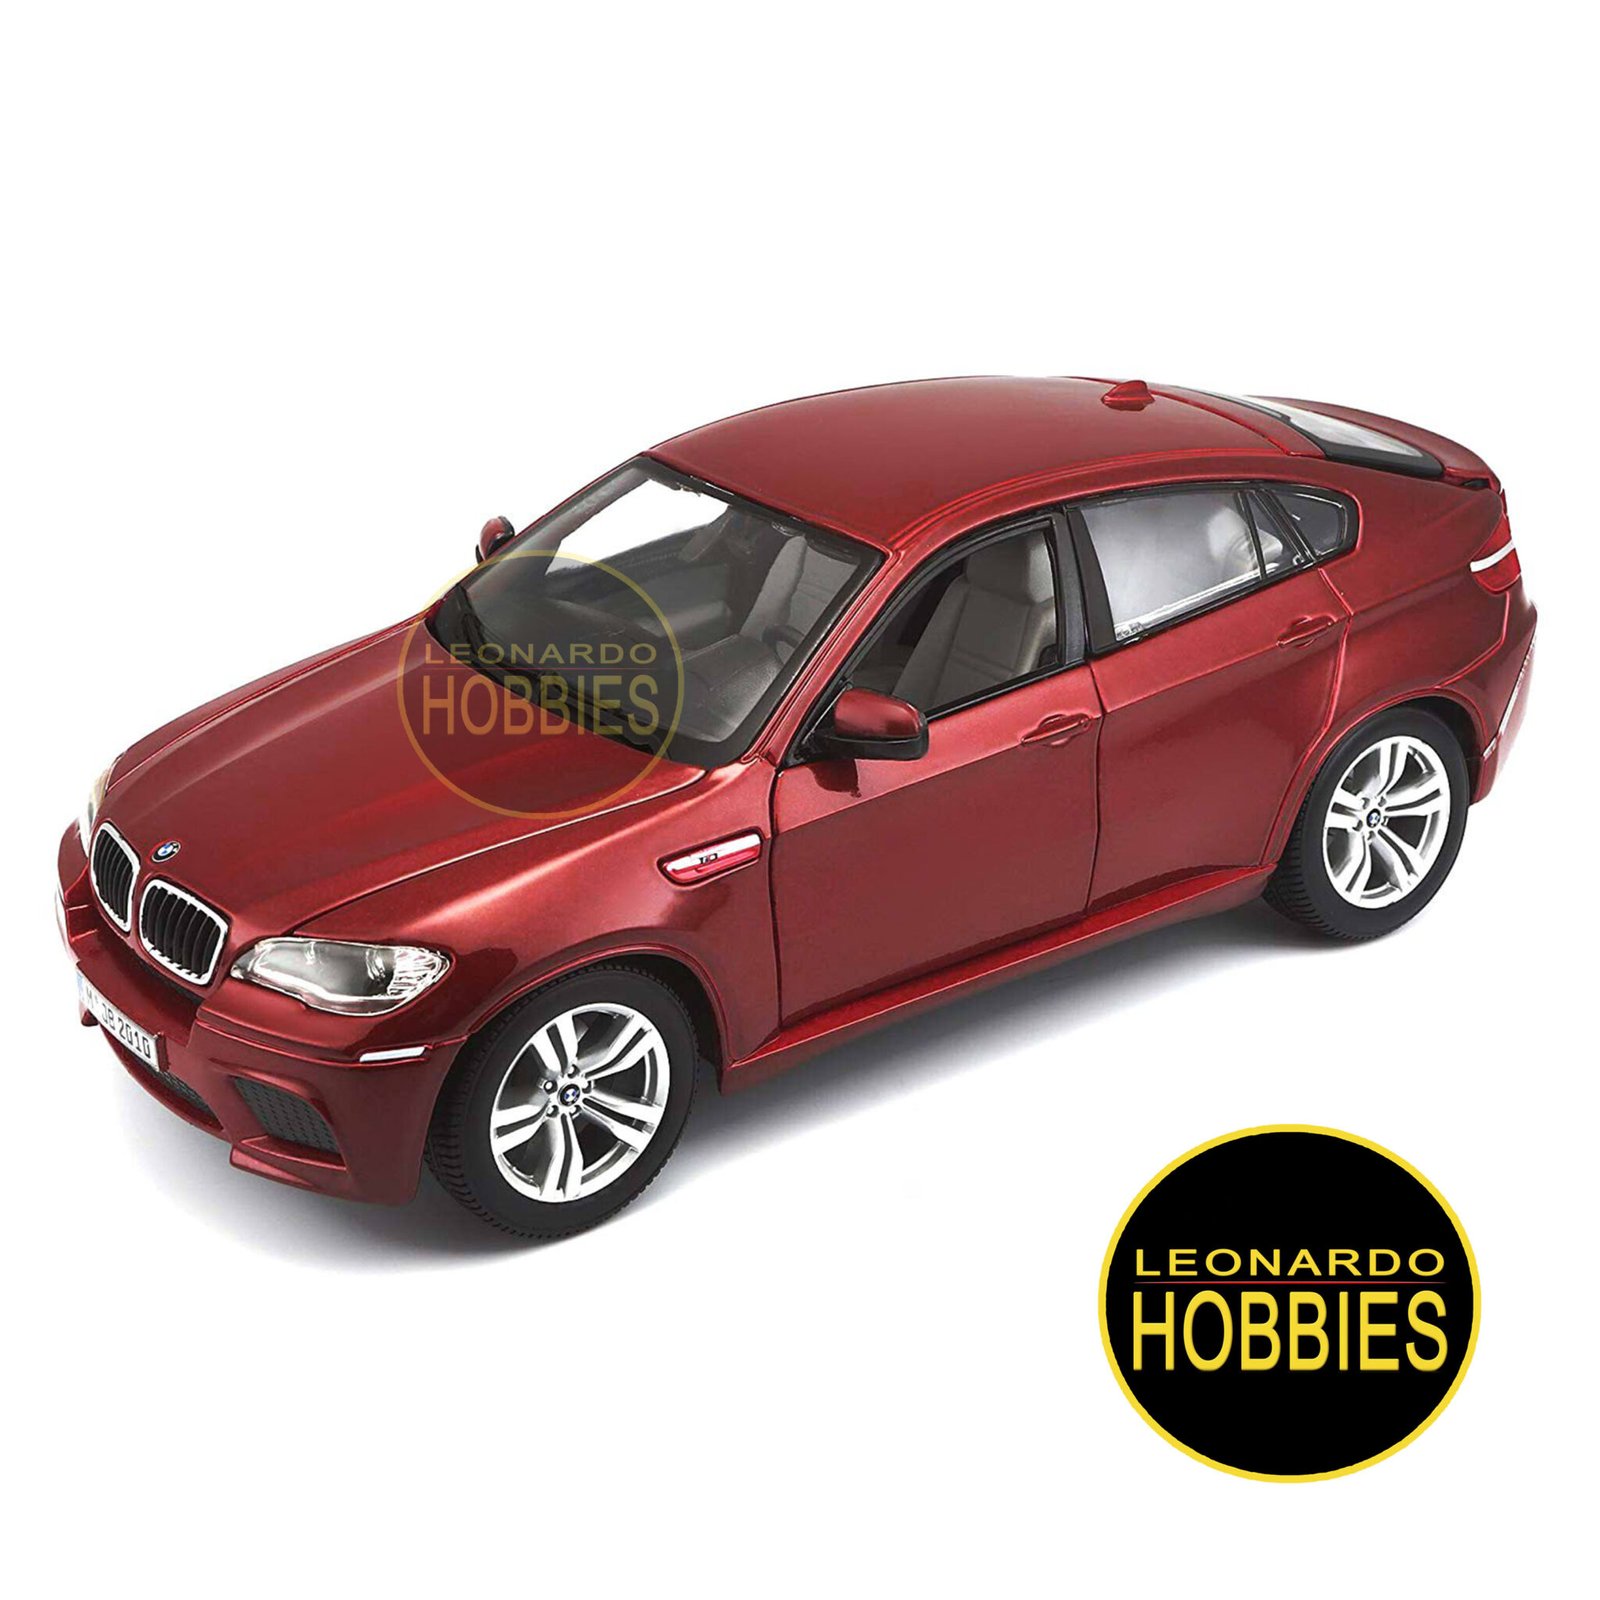 BMW X6 M Escala 1/18 BBurago 1811032 – Leonardo Hobbies